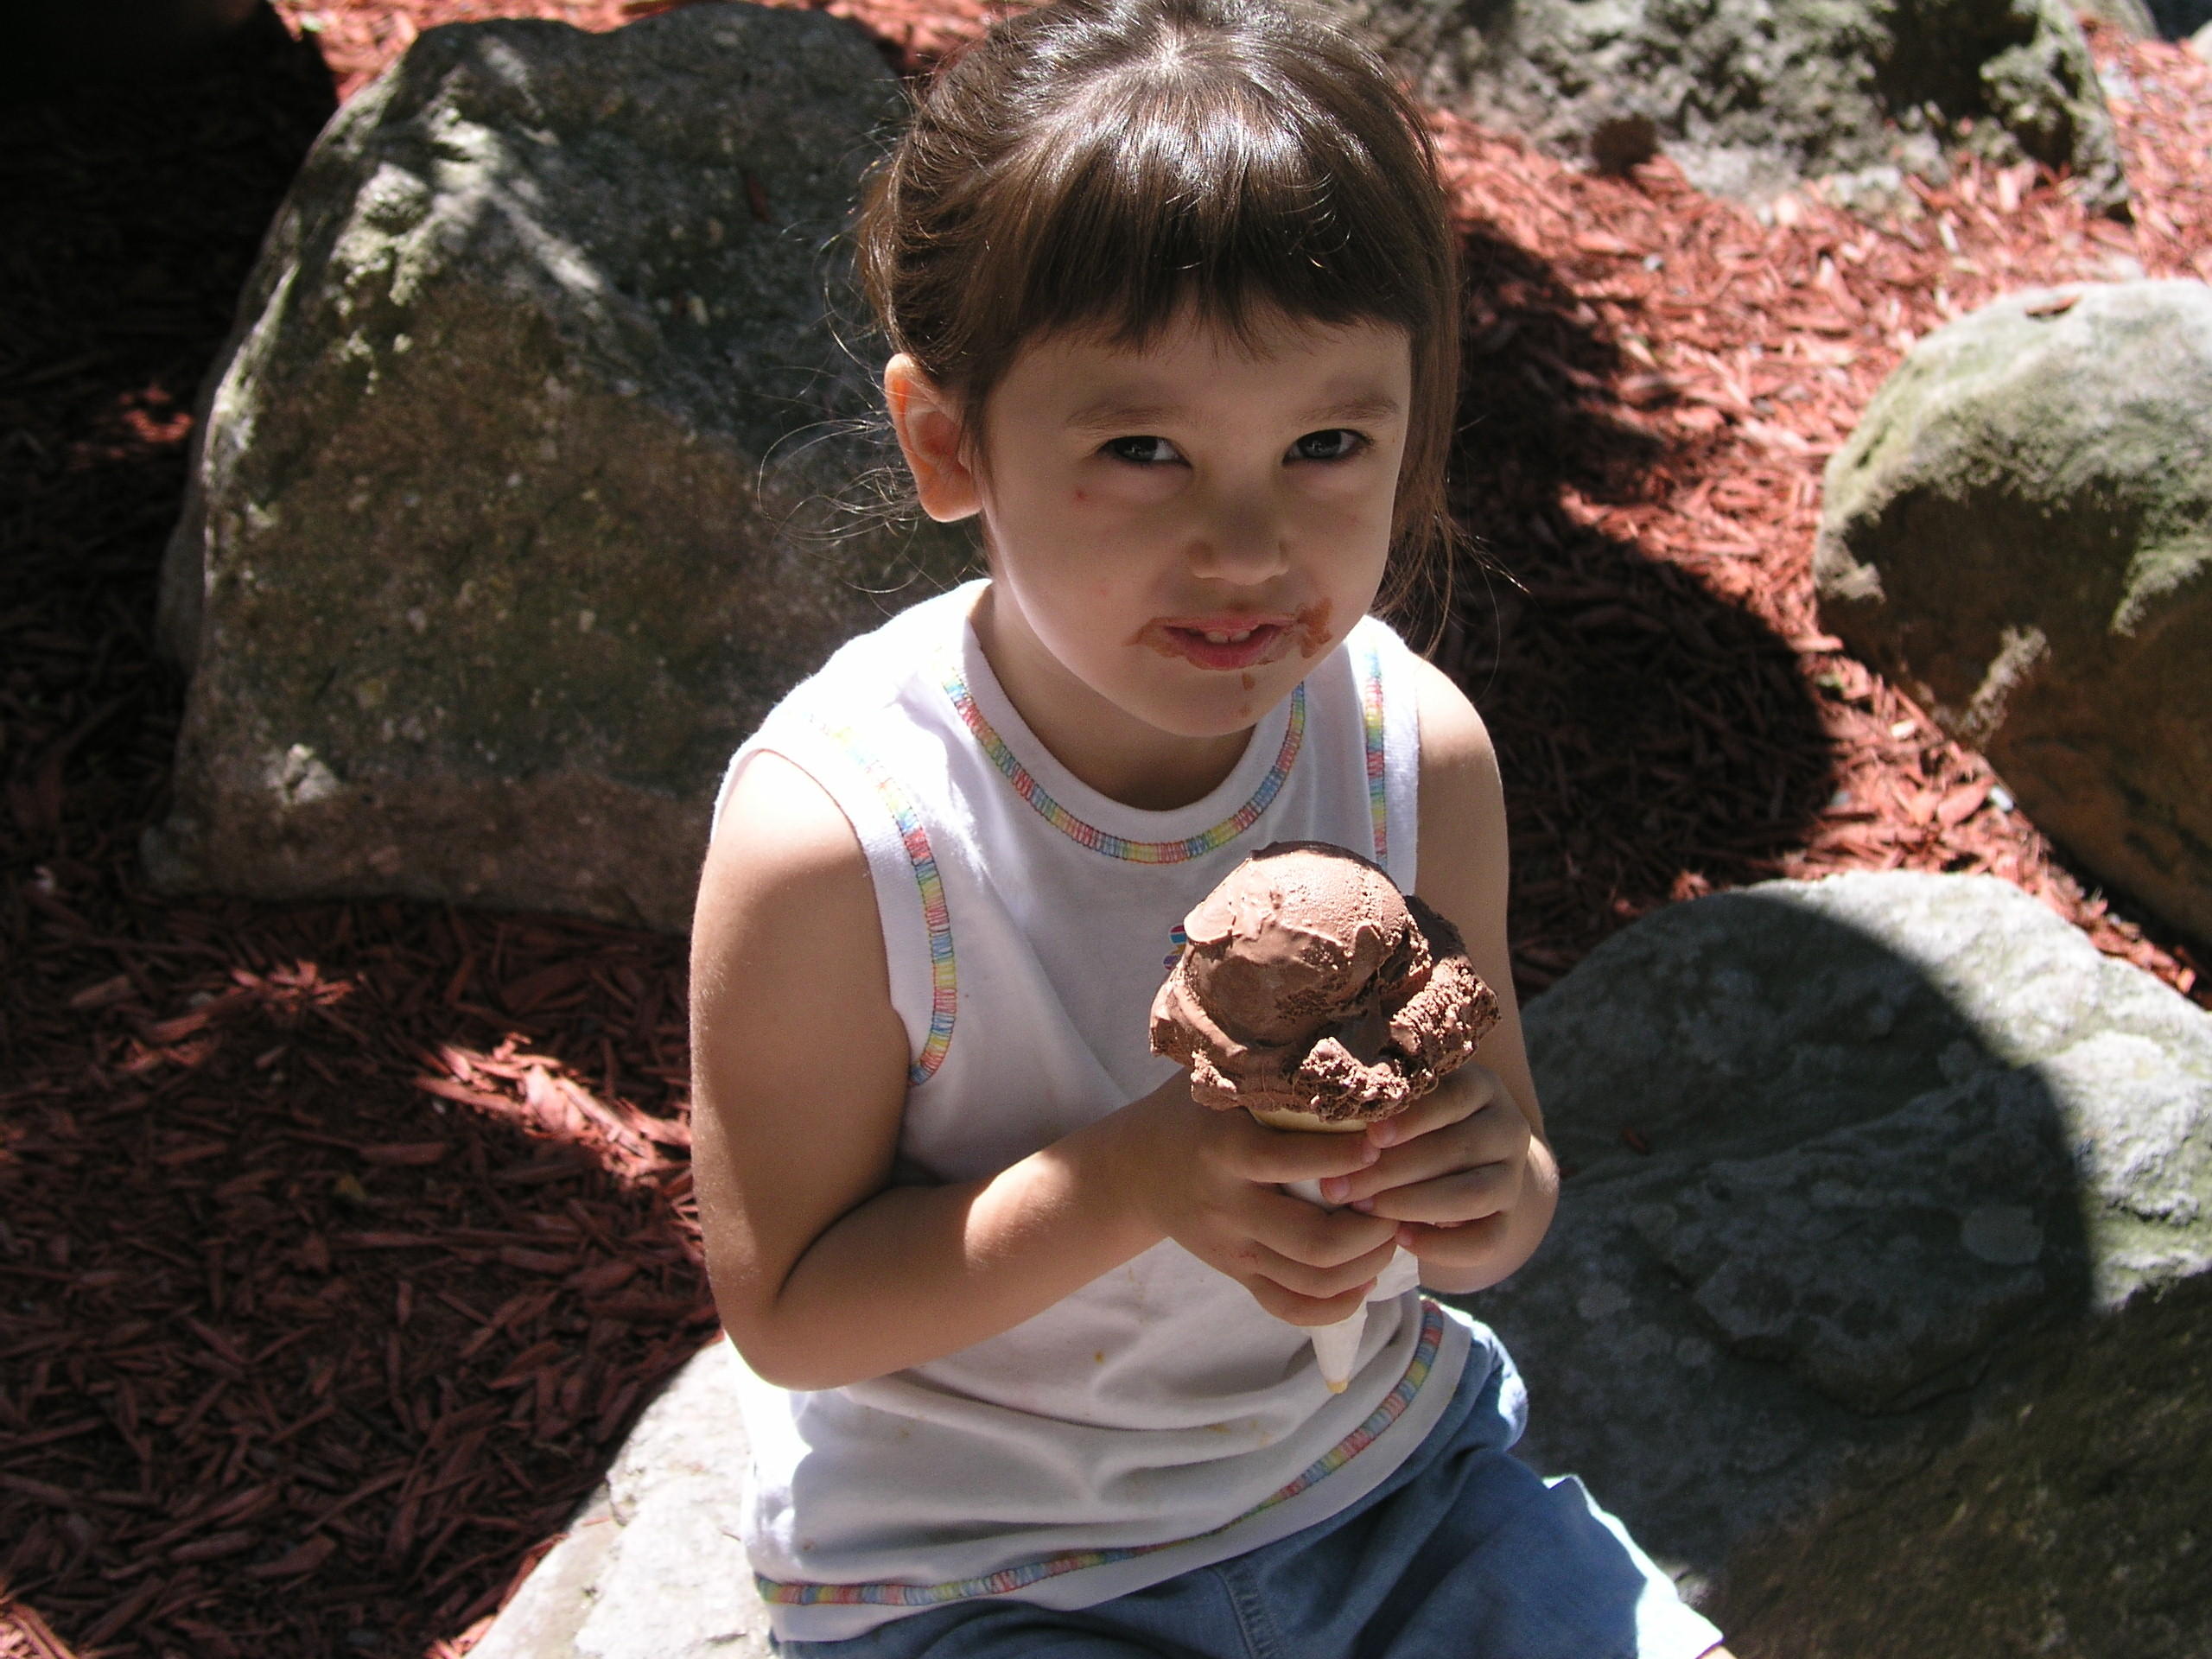 Sarah enjoying an ice cream cone at Knobles Grove